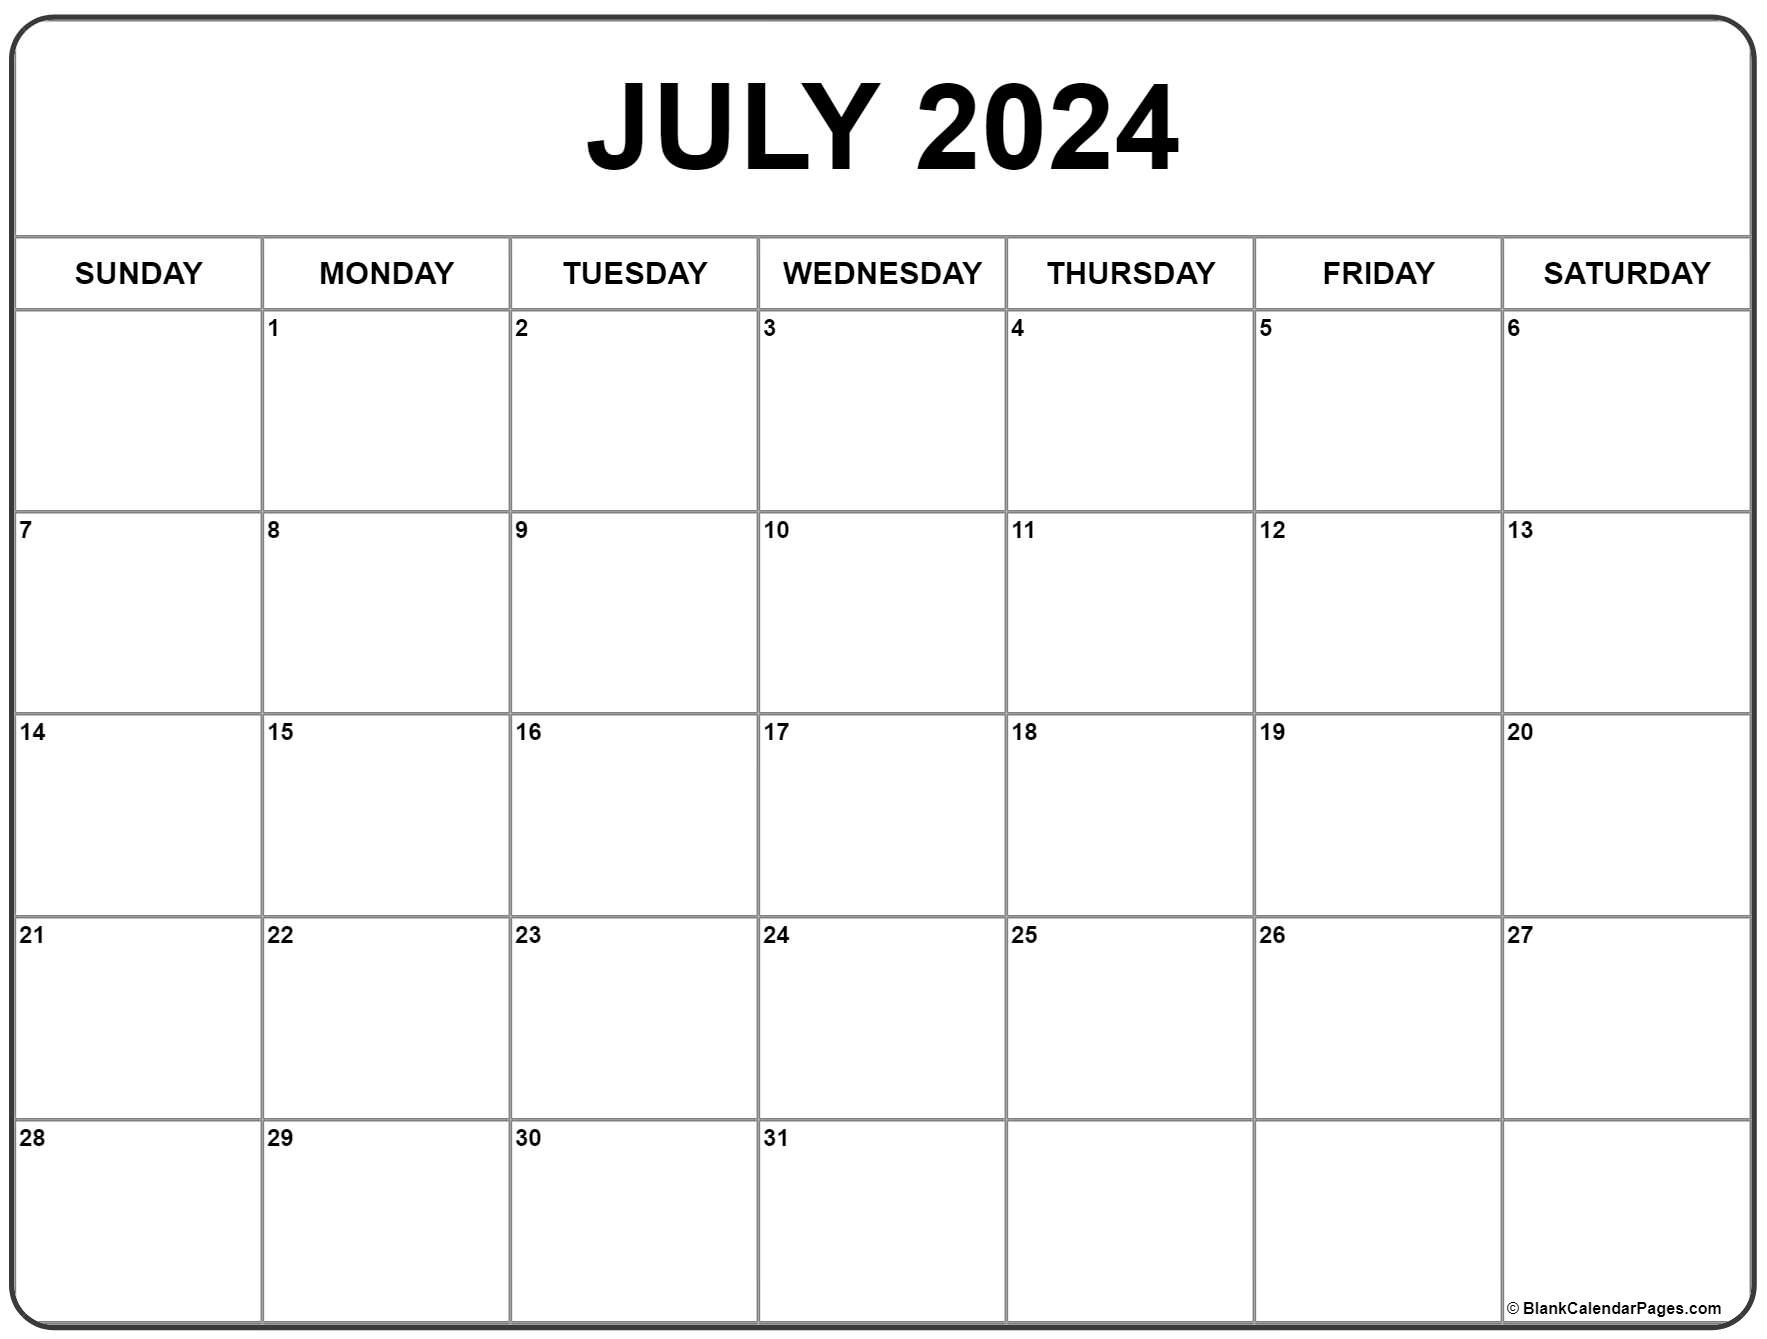 July 2024 Calendar | Free Printable Calendar for Free Printable July Calendar 2024